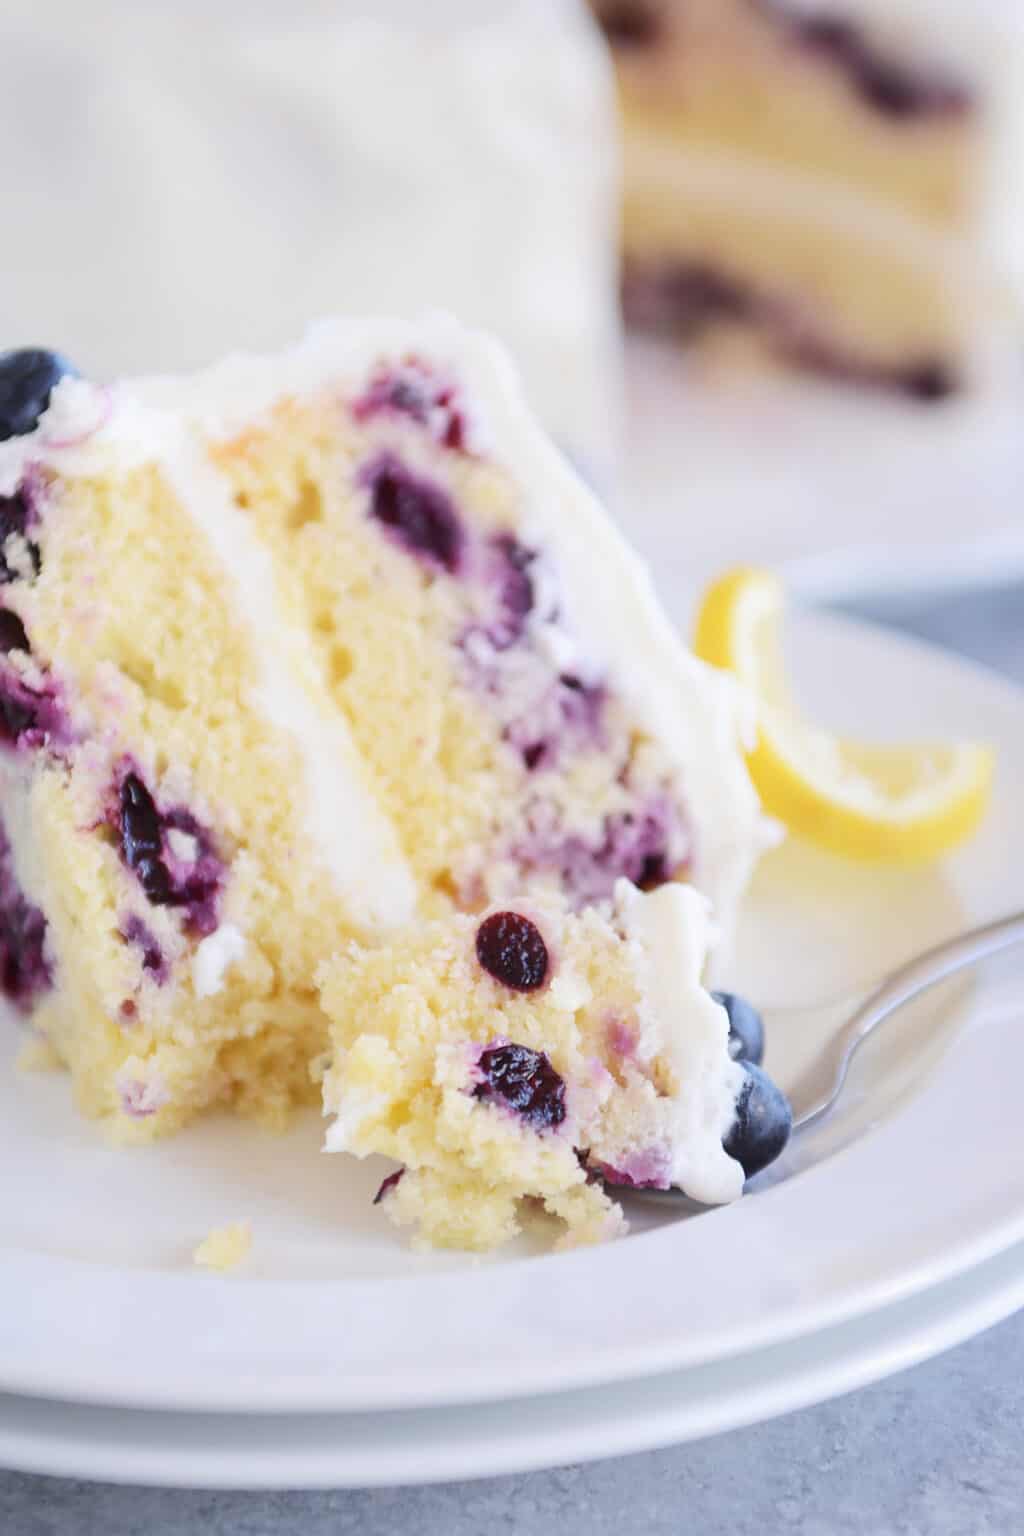 Lemon Blueberry Cake with Whipped Lemon Frosting